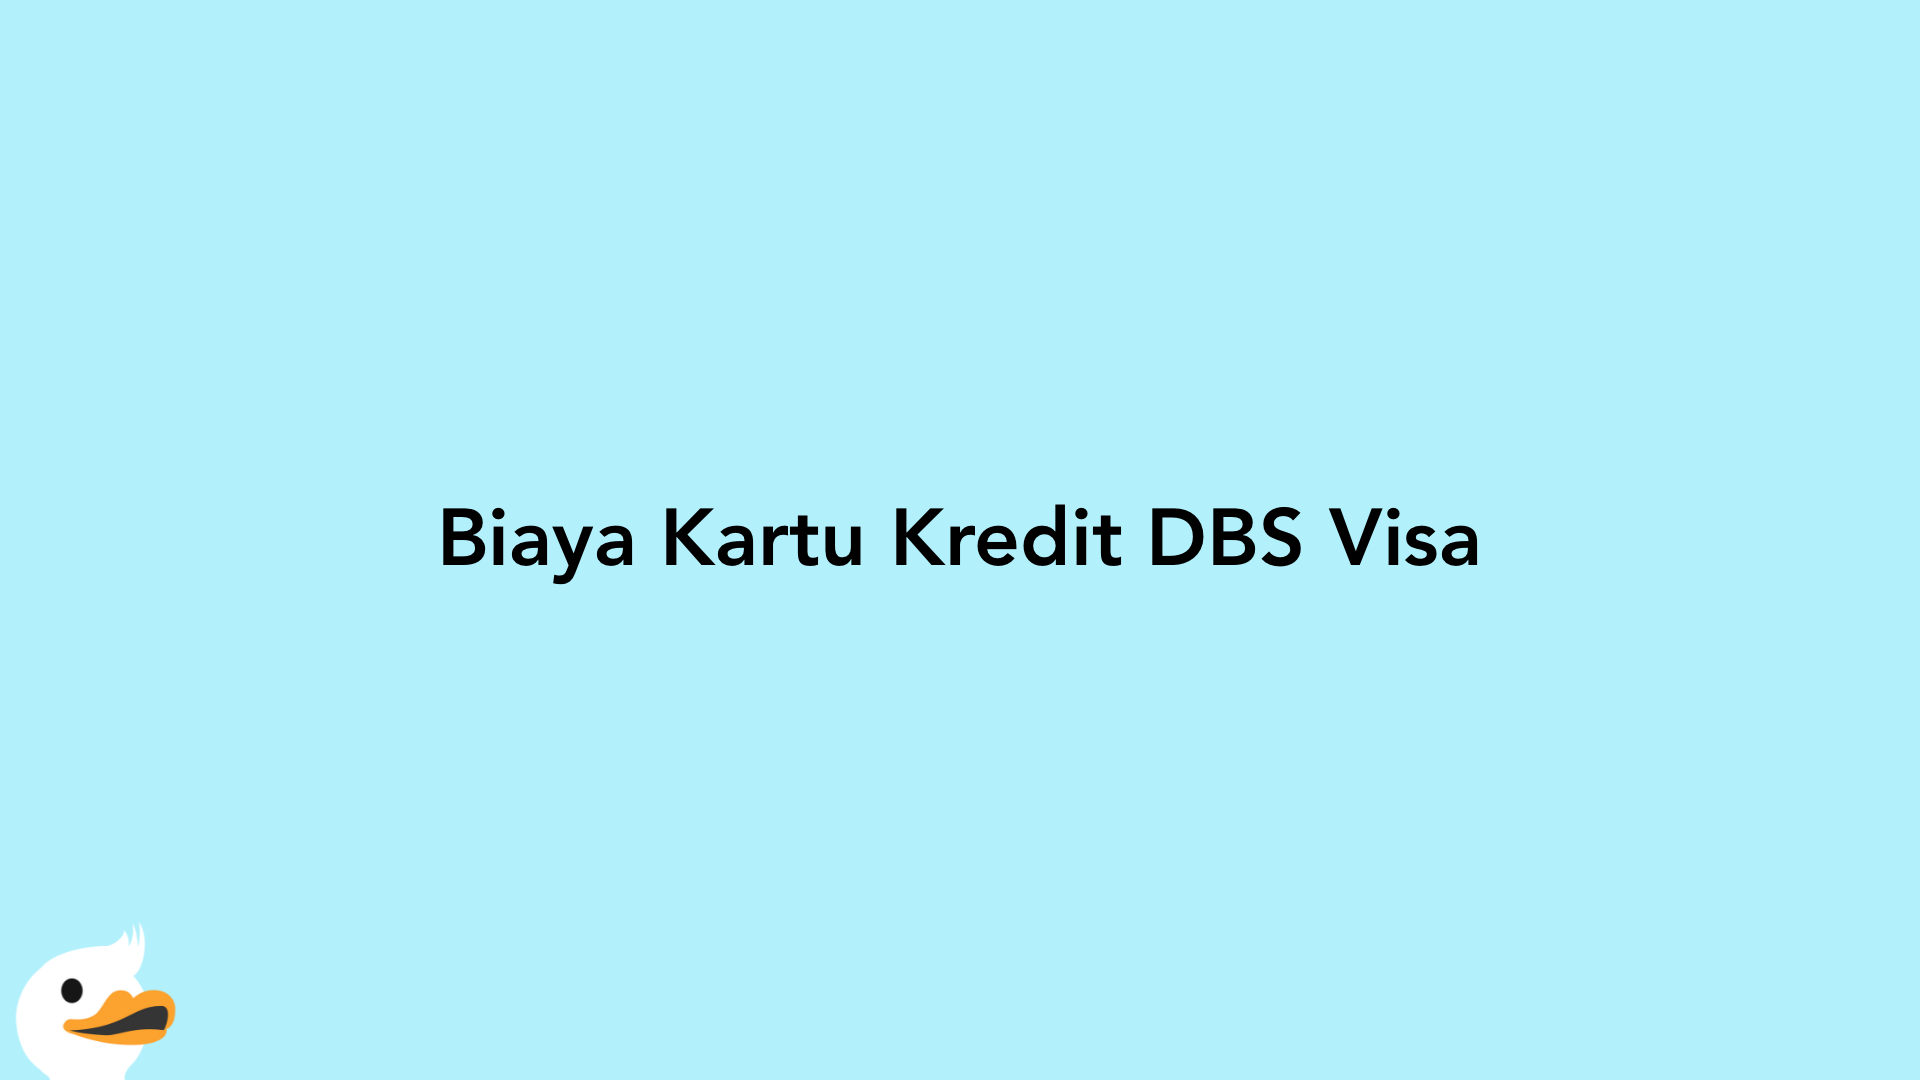 Biaya Kartu Kredit DBS Visa